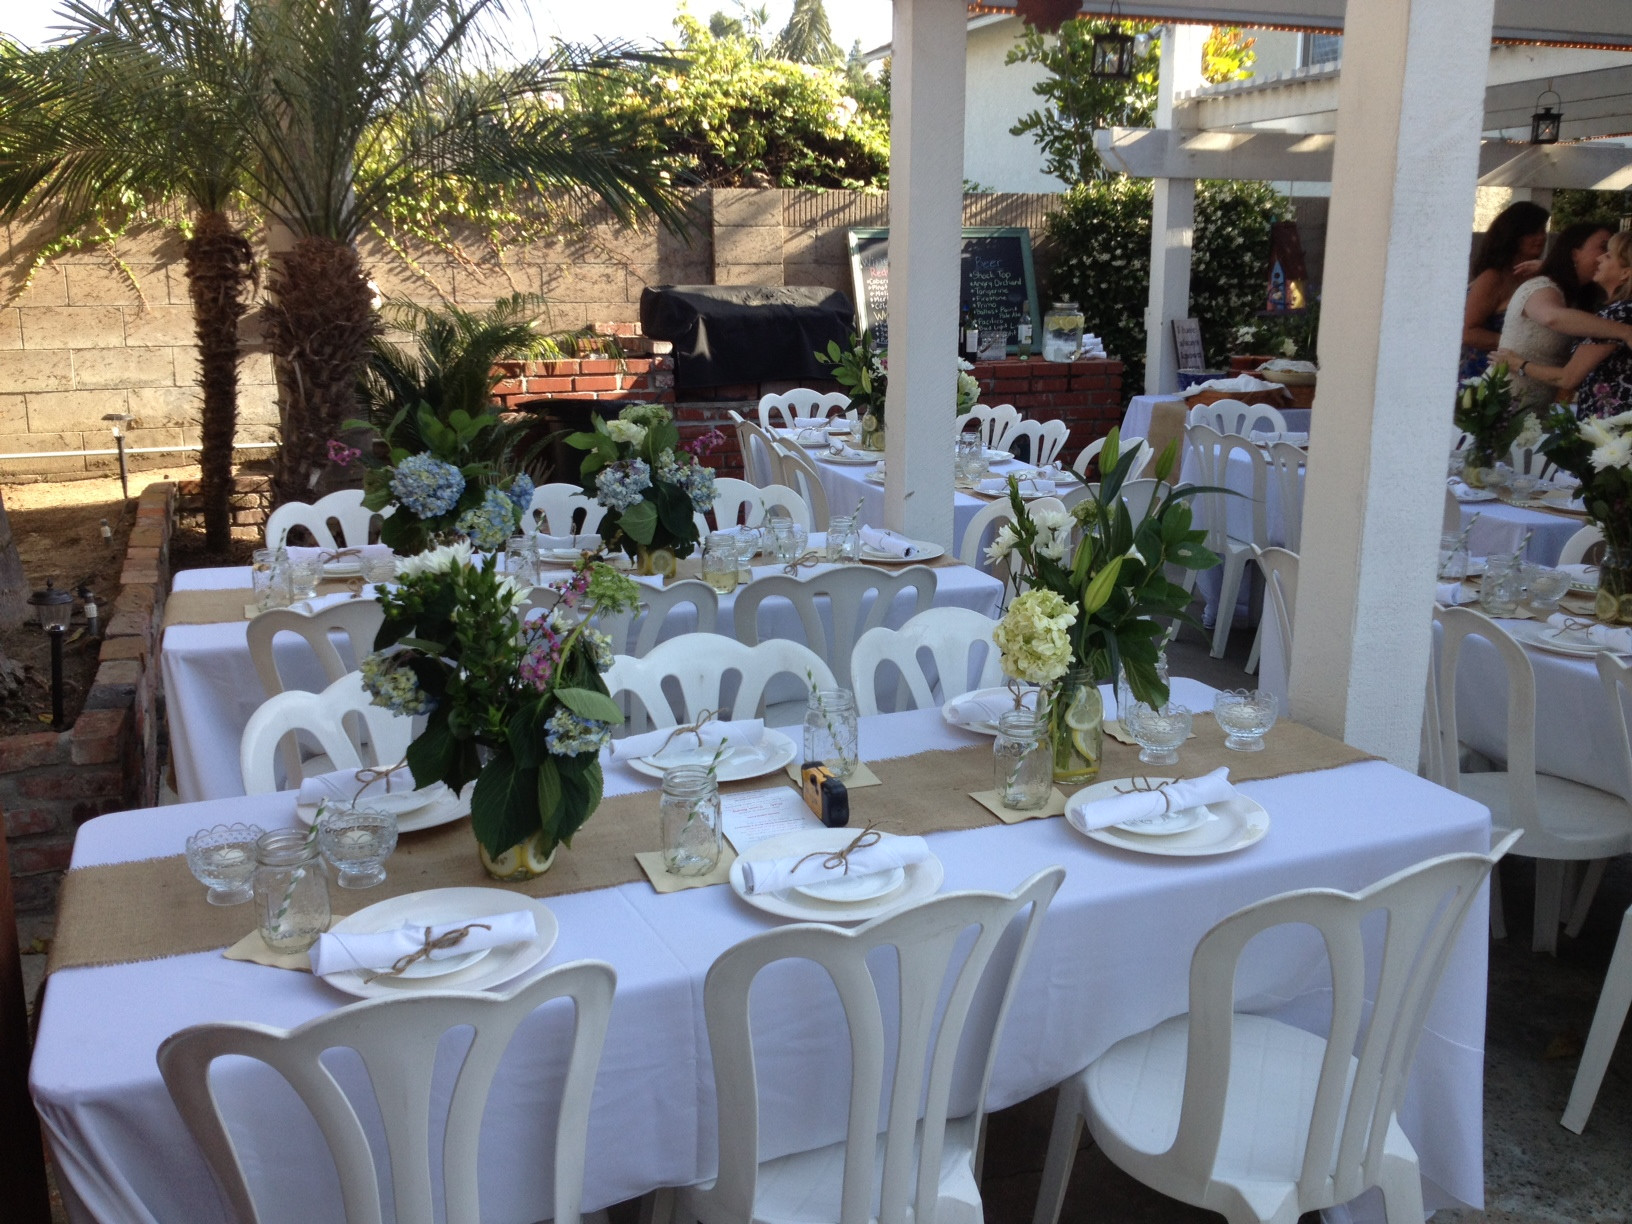 Best ideas about DIY Wedding Receptions Ideas
. Save or Pin Backyard DIY Wedding Reception Now.